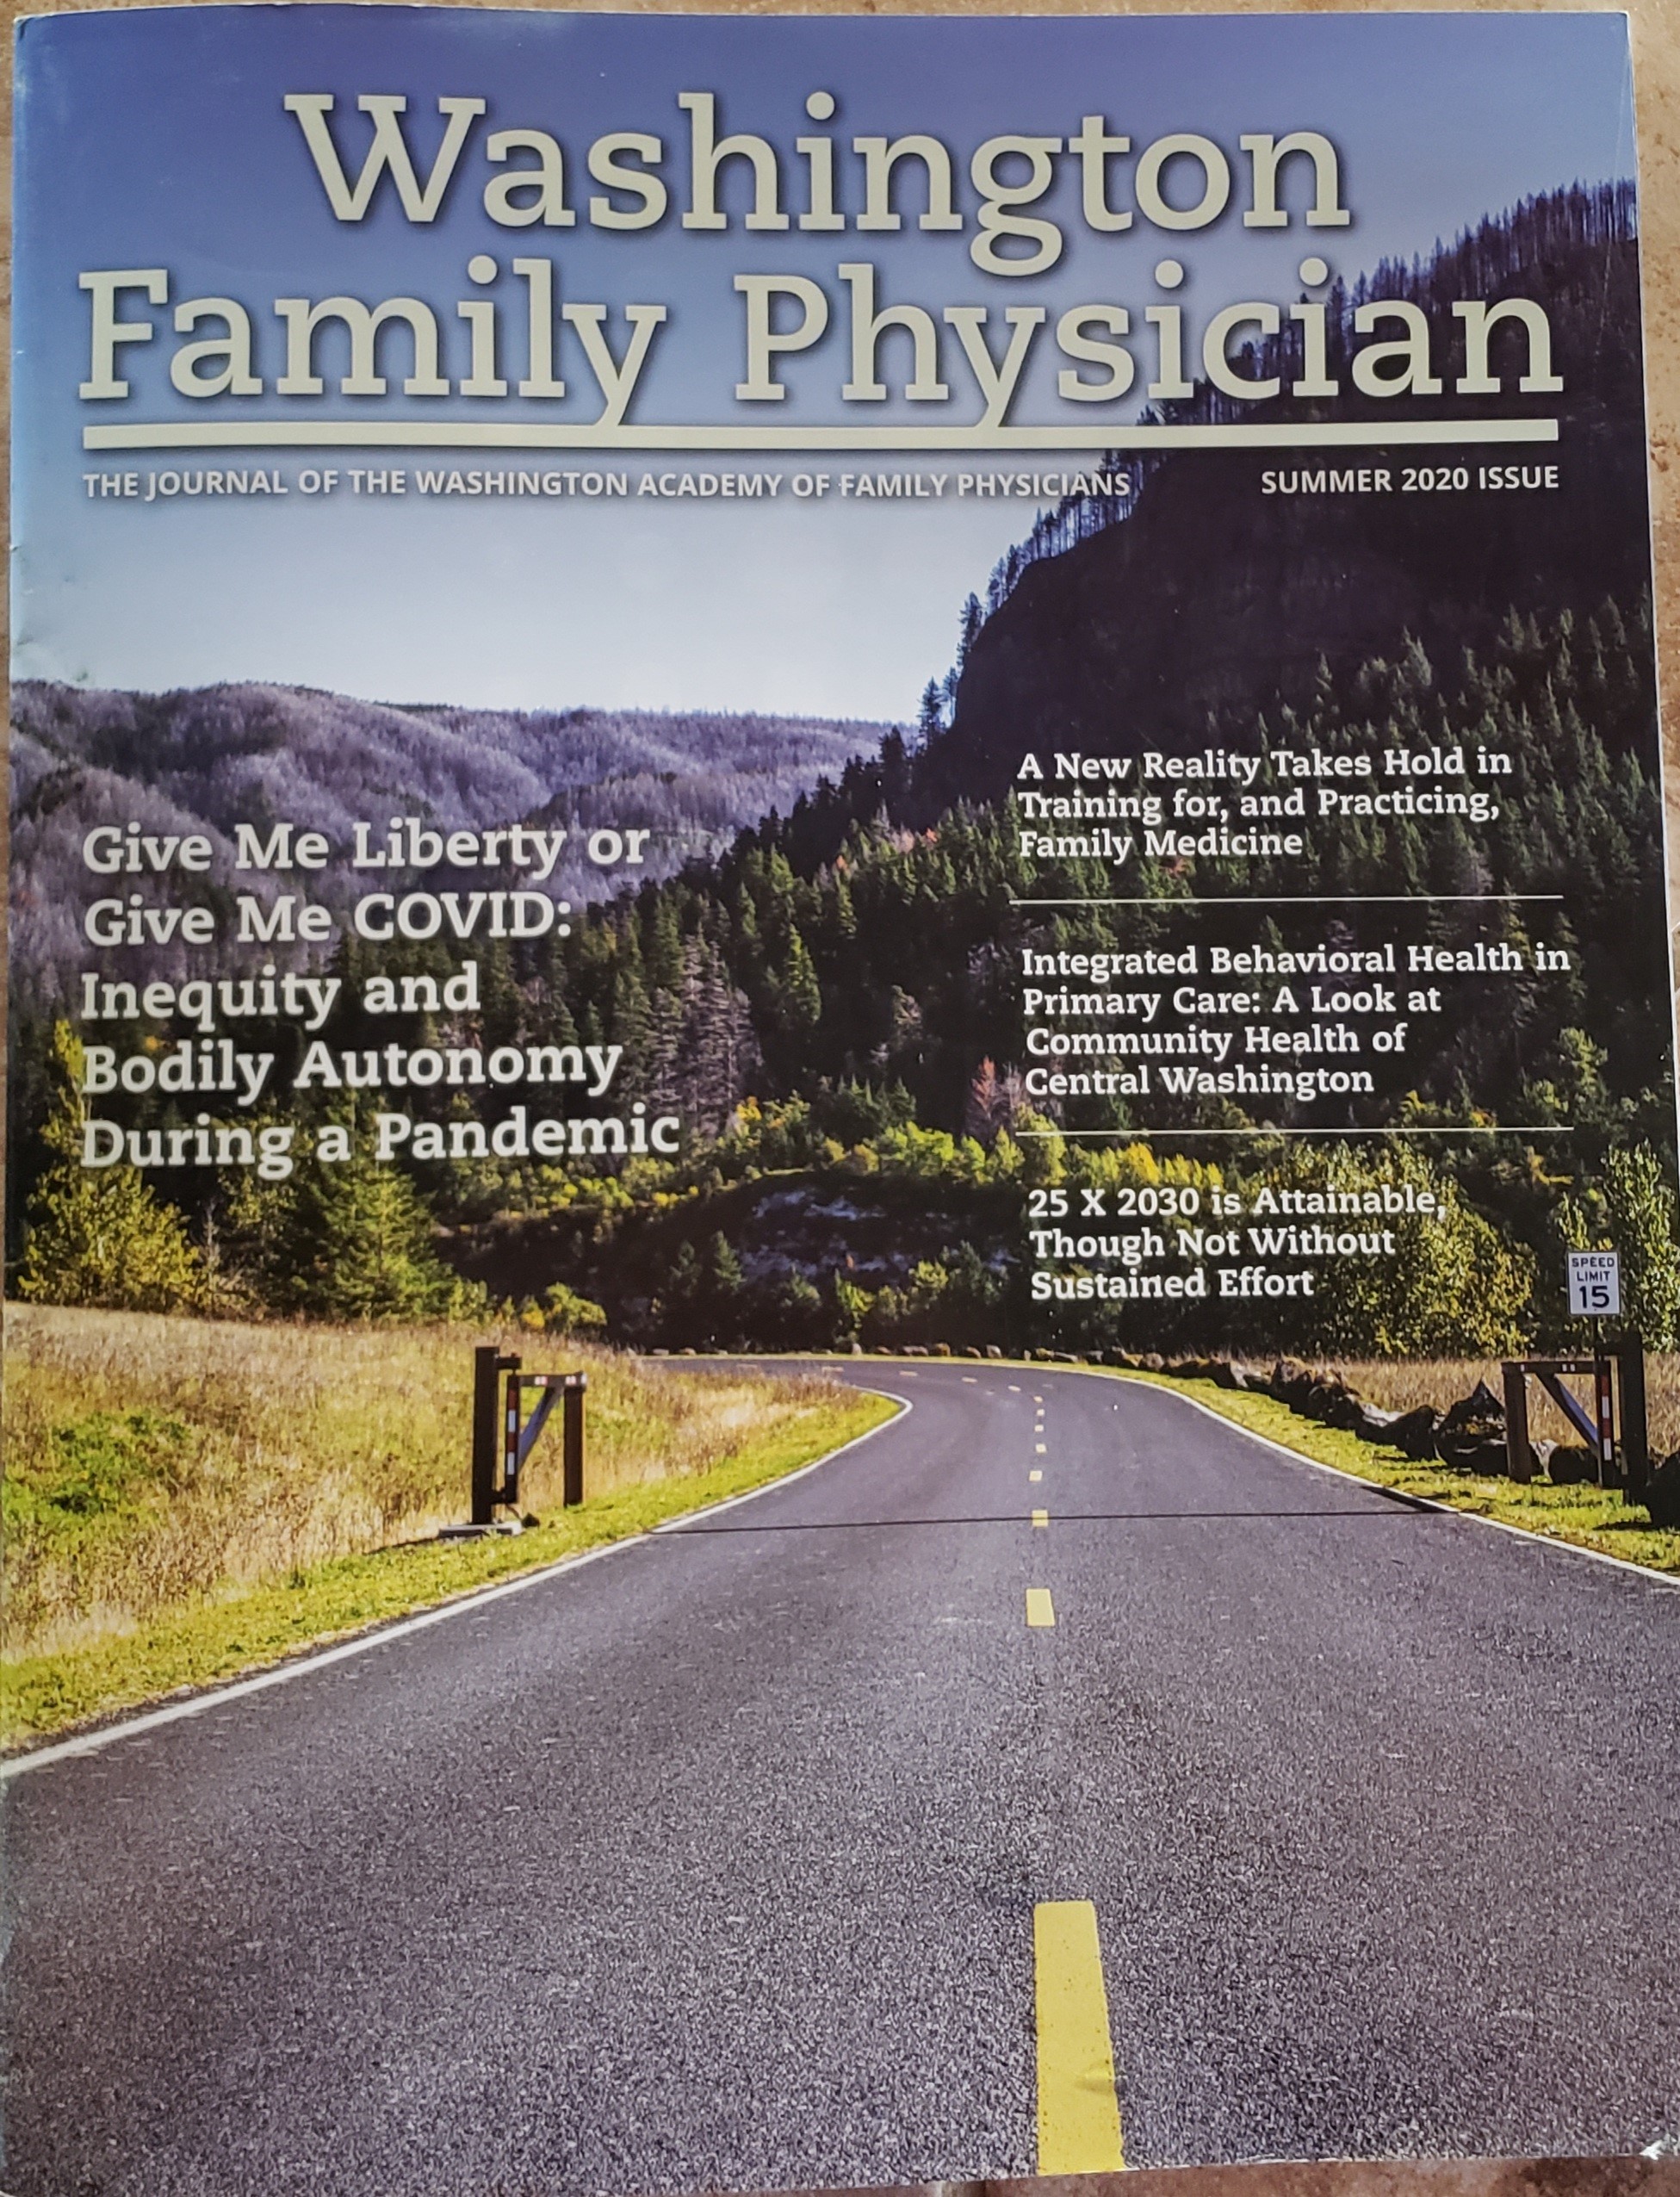 CHCW-in-Washington-Family-Physician